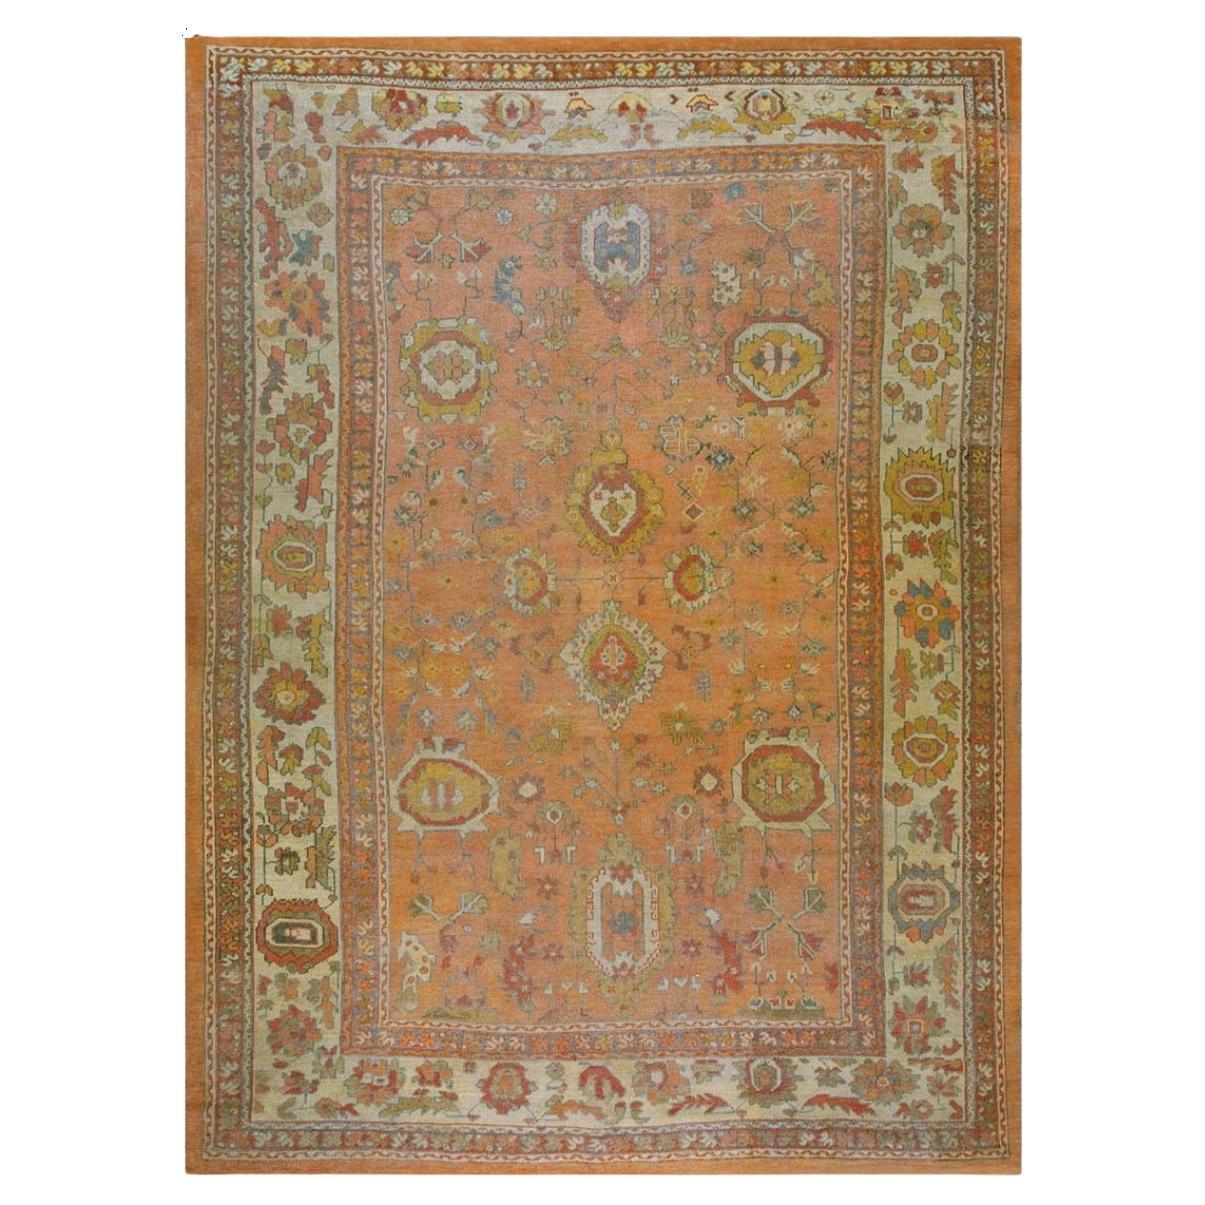 19th Century Turkish Oushak Carpet ( 9'3" x 12'10" - 282 x 391 ) For Sale